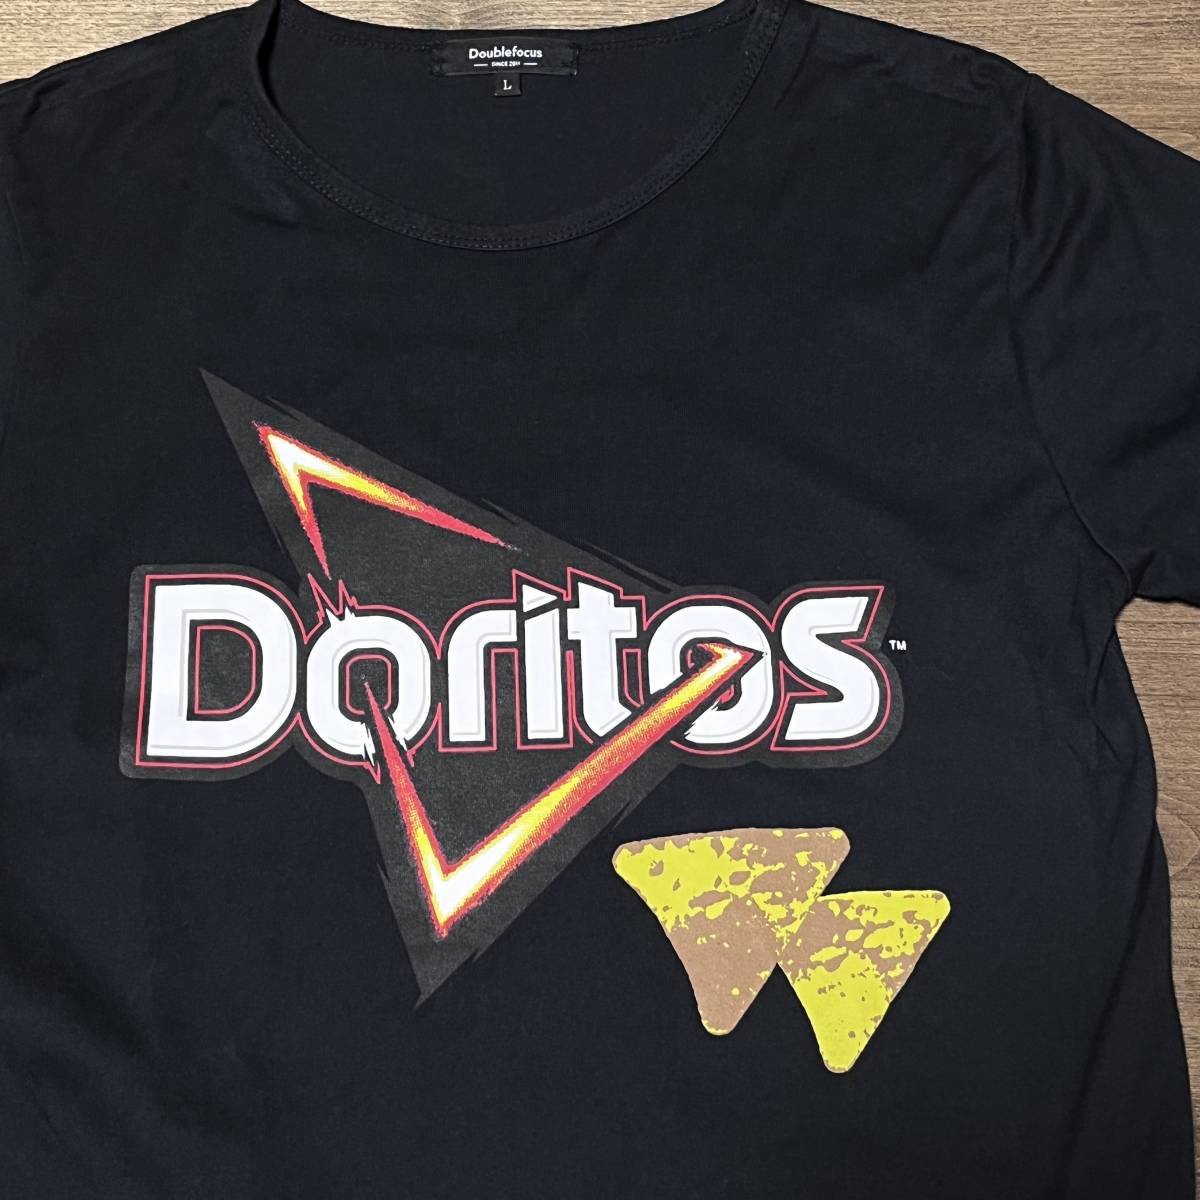 (Doublefocus)dolitos T-shirt 